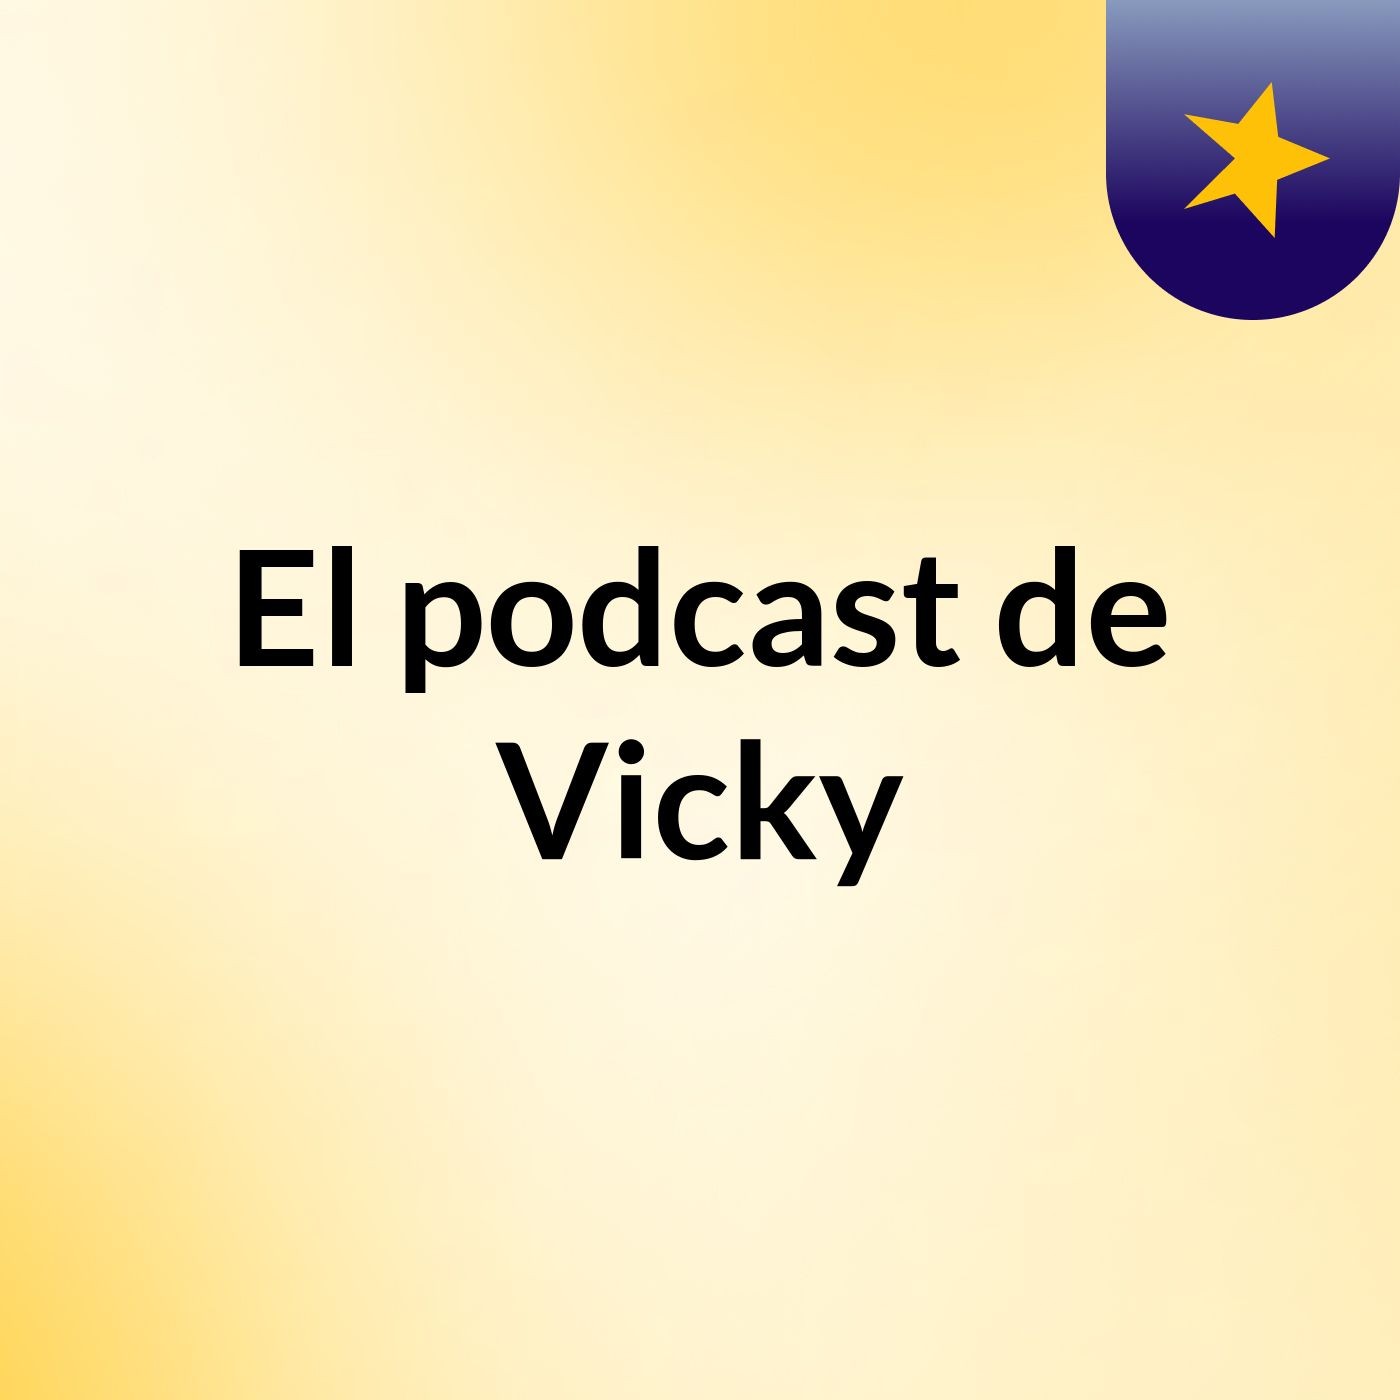 El podcast de Vicky